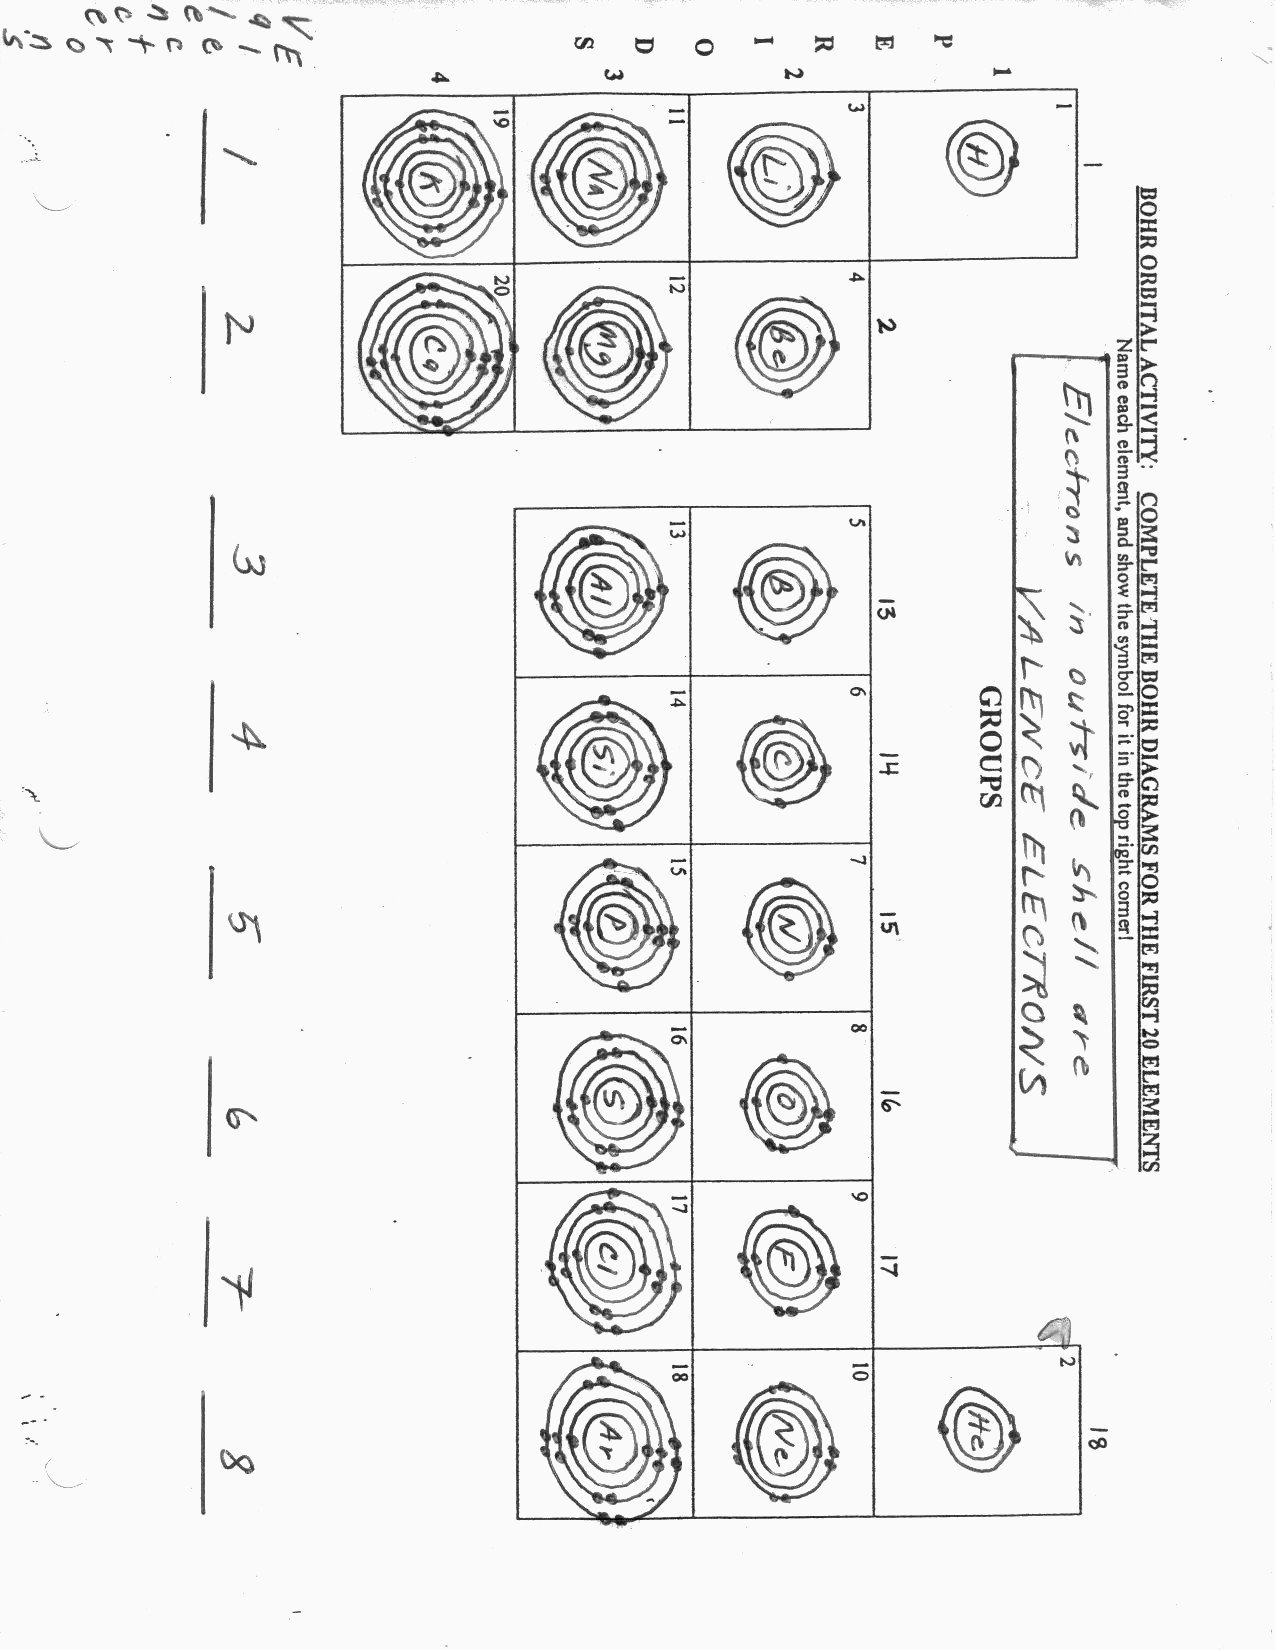 Bohr Model Blank Bohr Model And Lewis Dot Diagram Worksheet Answers Pertaining To Bohr Model And Lewis Dot Diagram Worksheet Answers